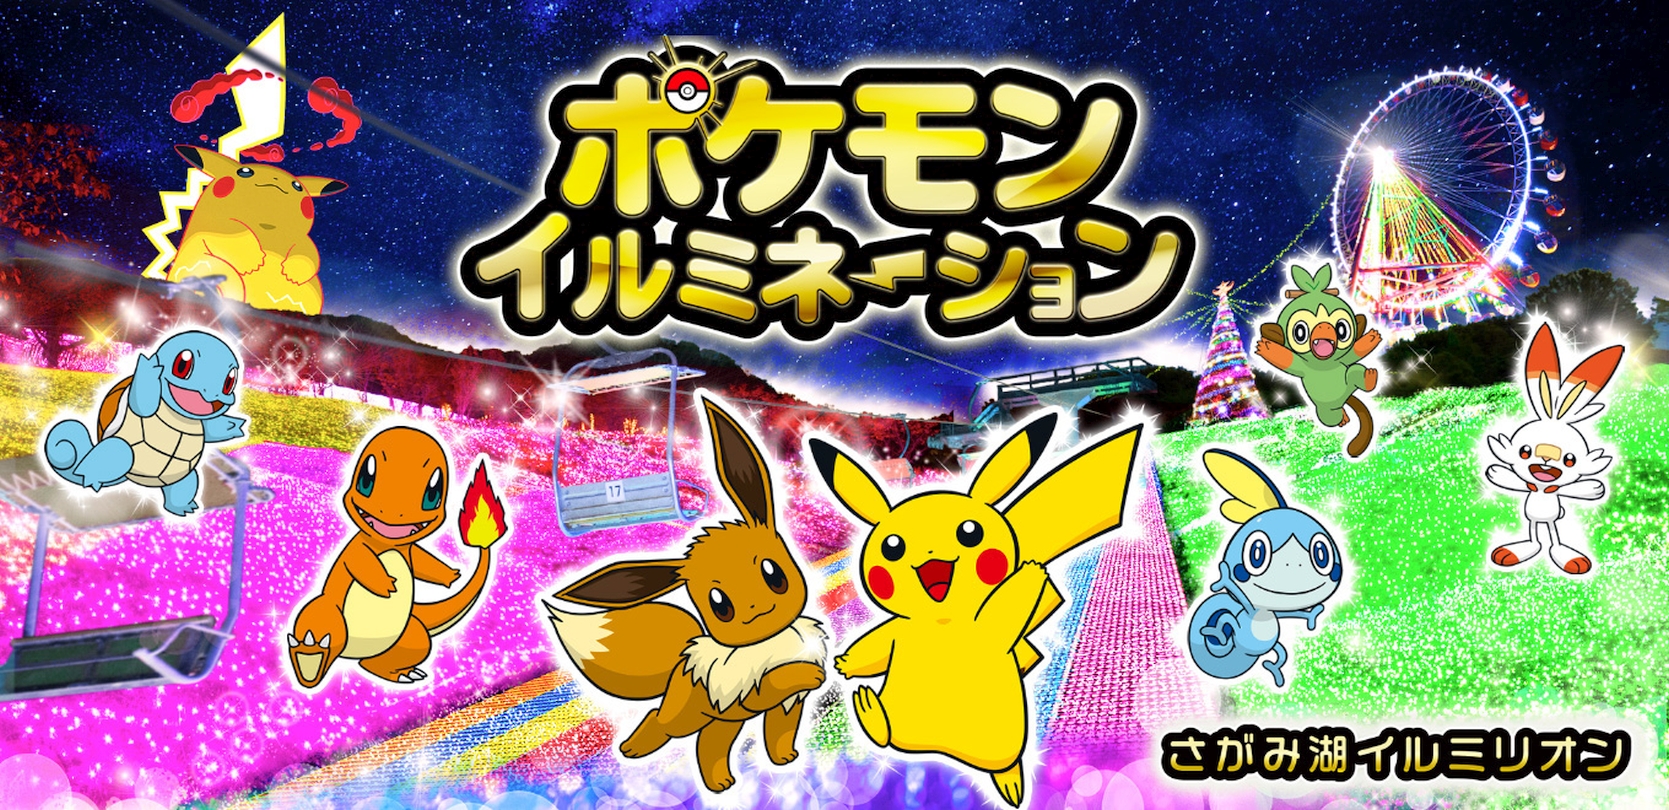 Pokémon Illumination Event Returns In Japan To Light Up Fans’ Lives